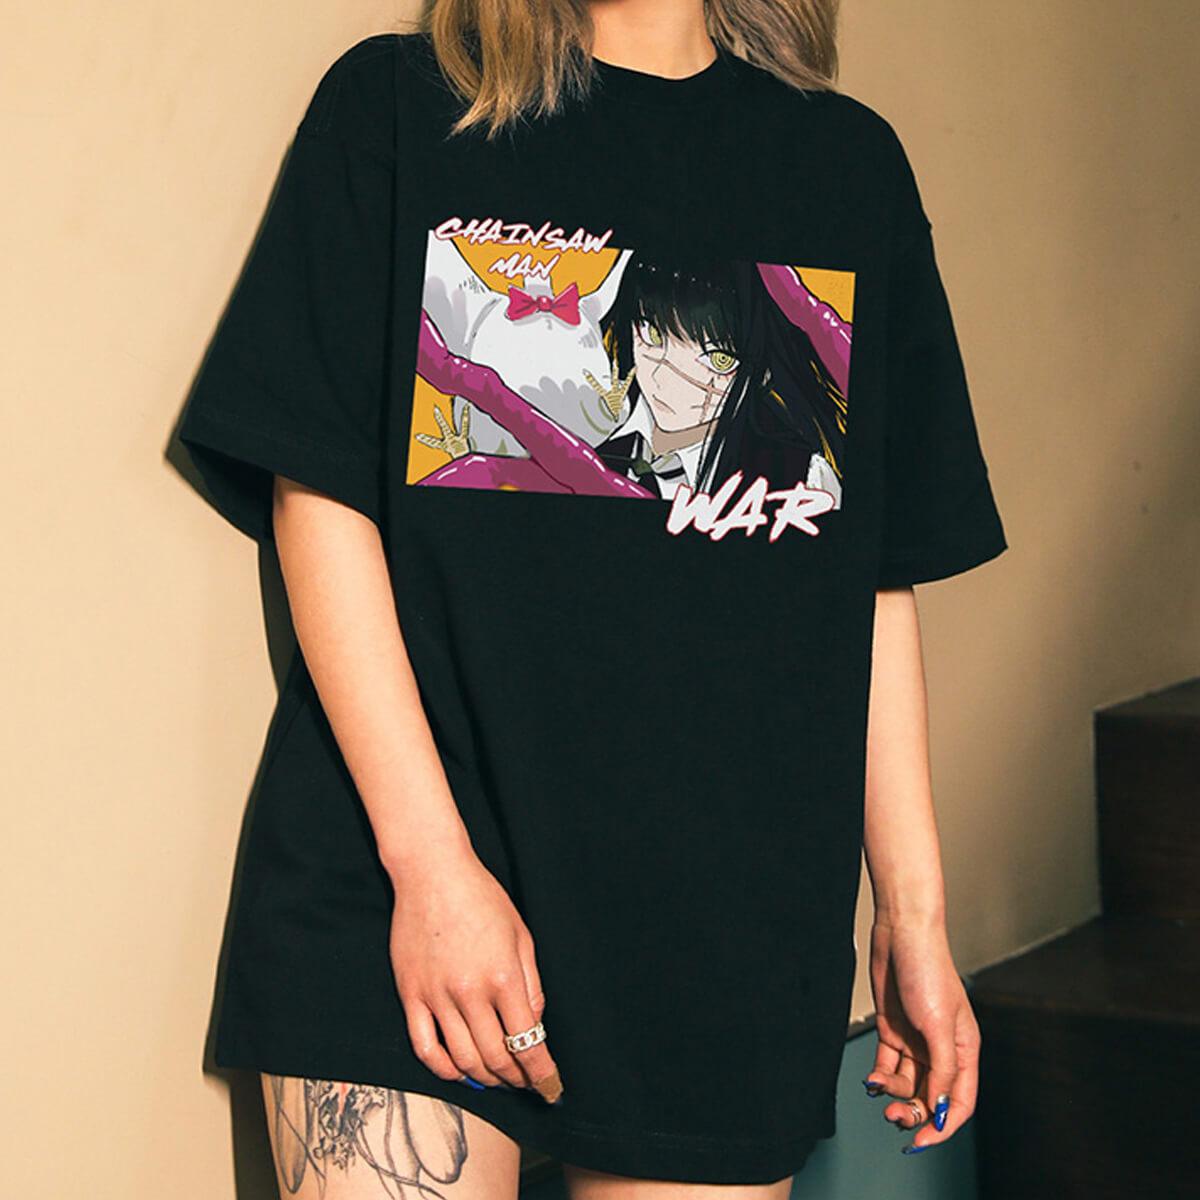 Chainsaw Man Yoru War Anime T-Shirt - Aesthetic Clothes Shop